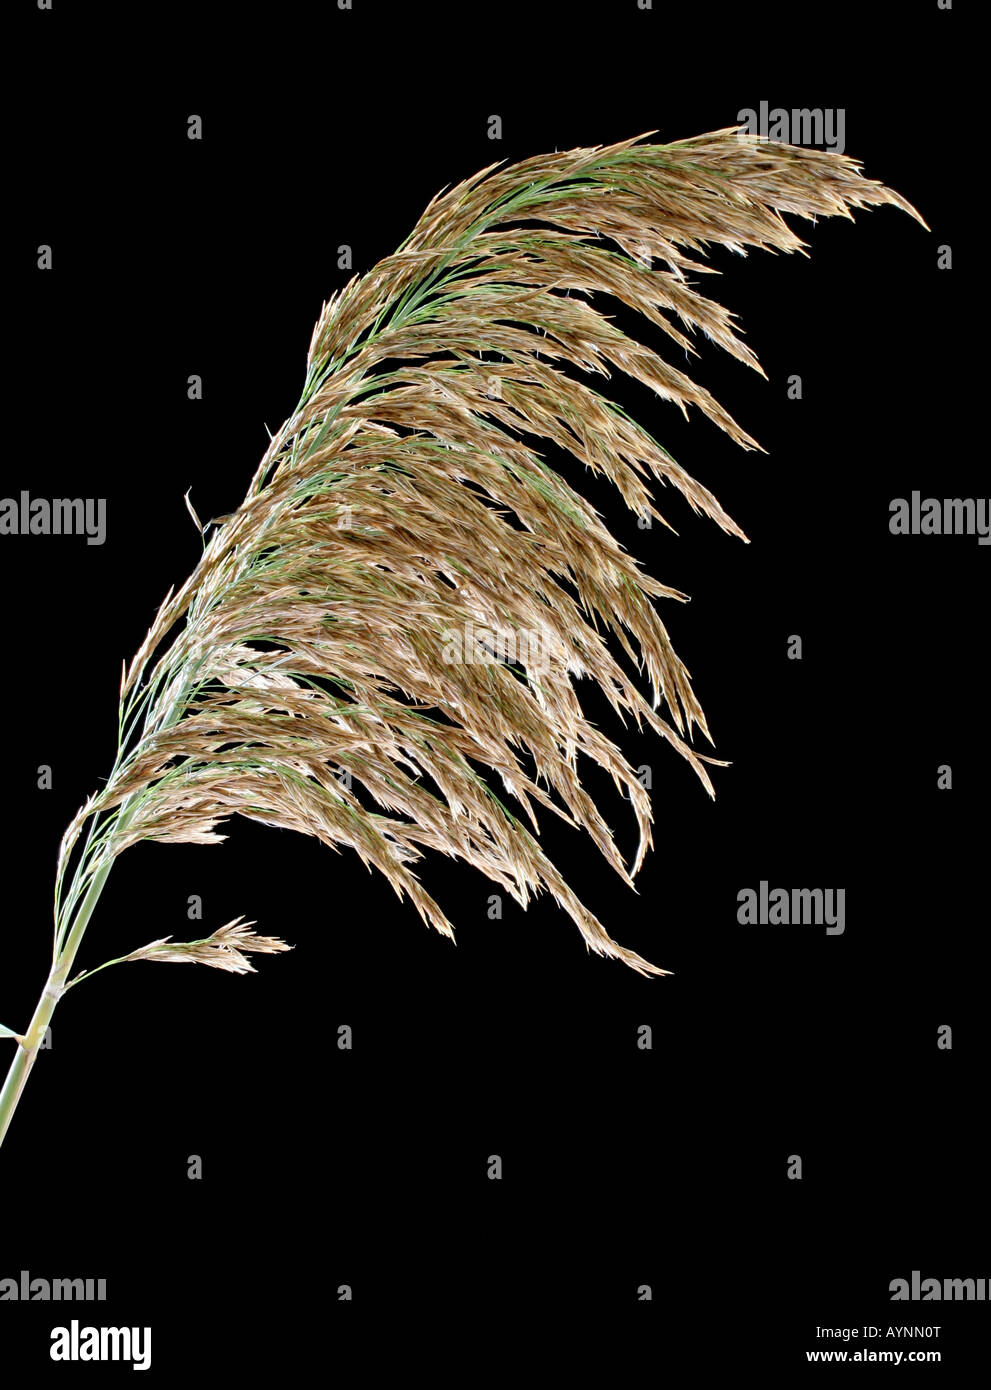 Seed head of the common reed, Phragmites australis. Stock Photo